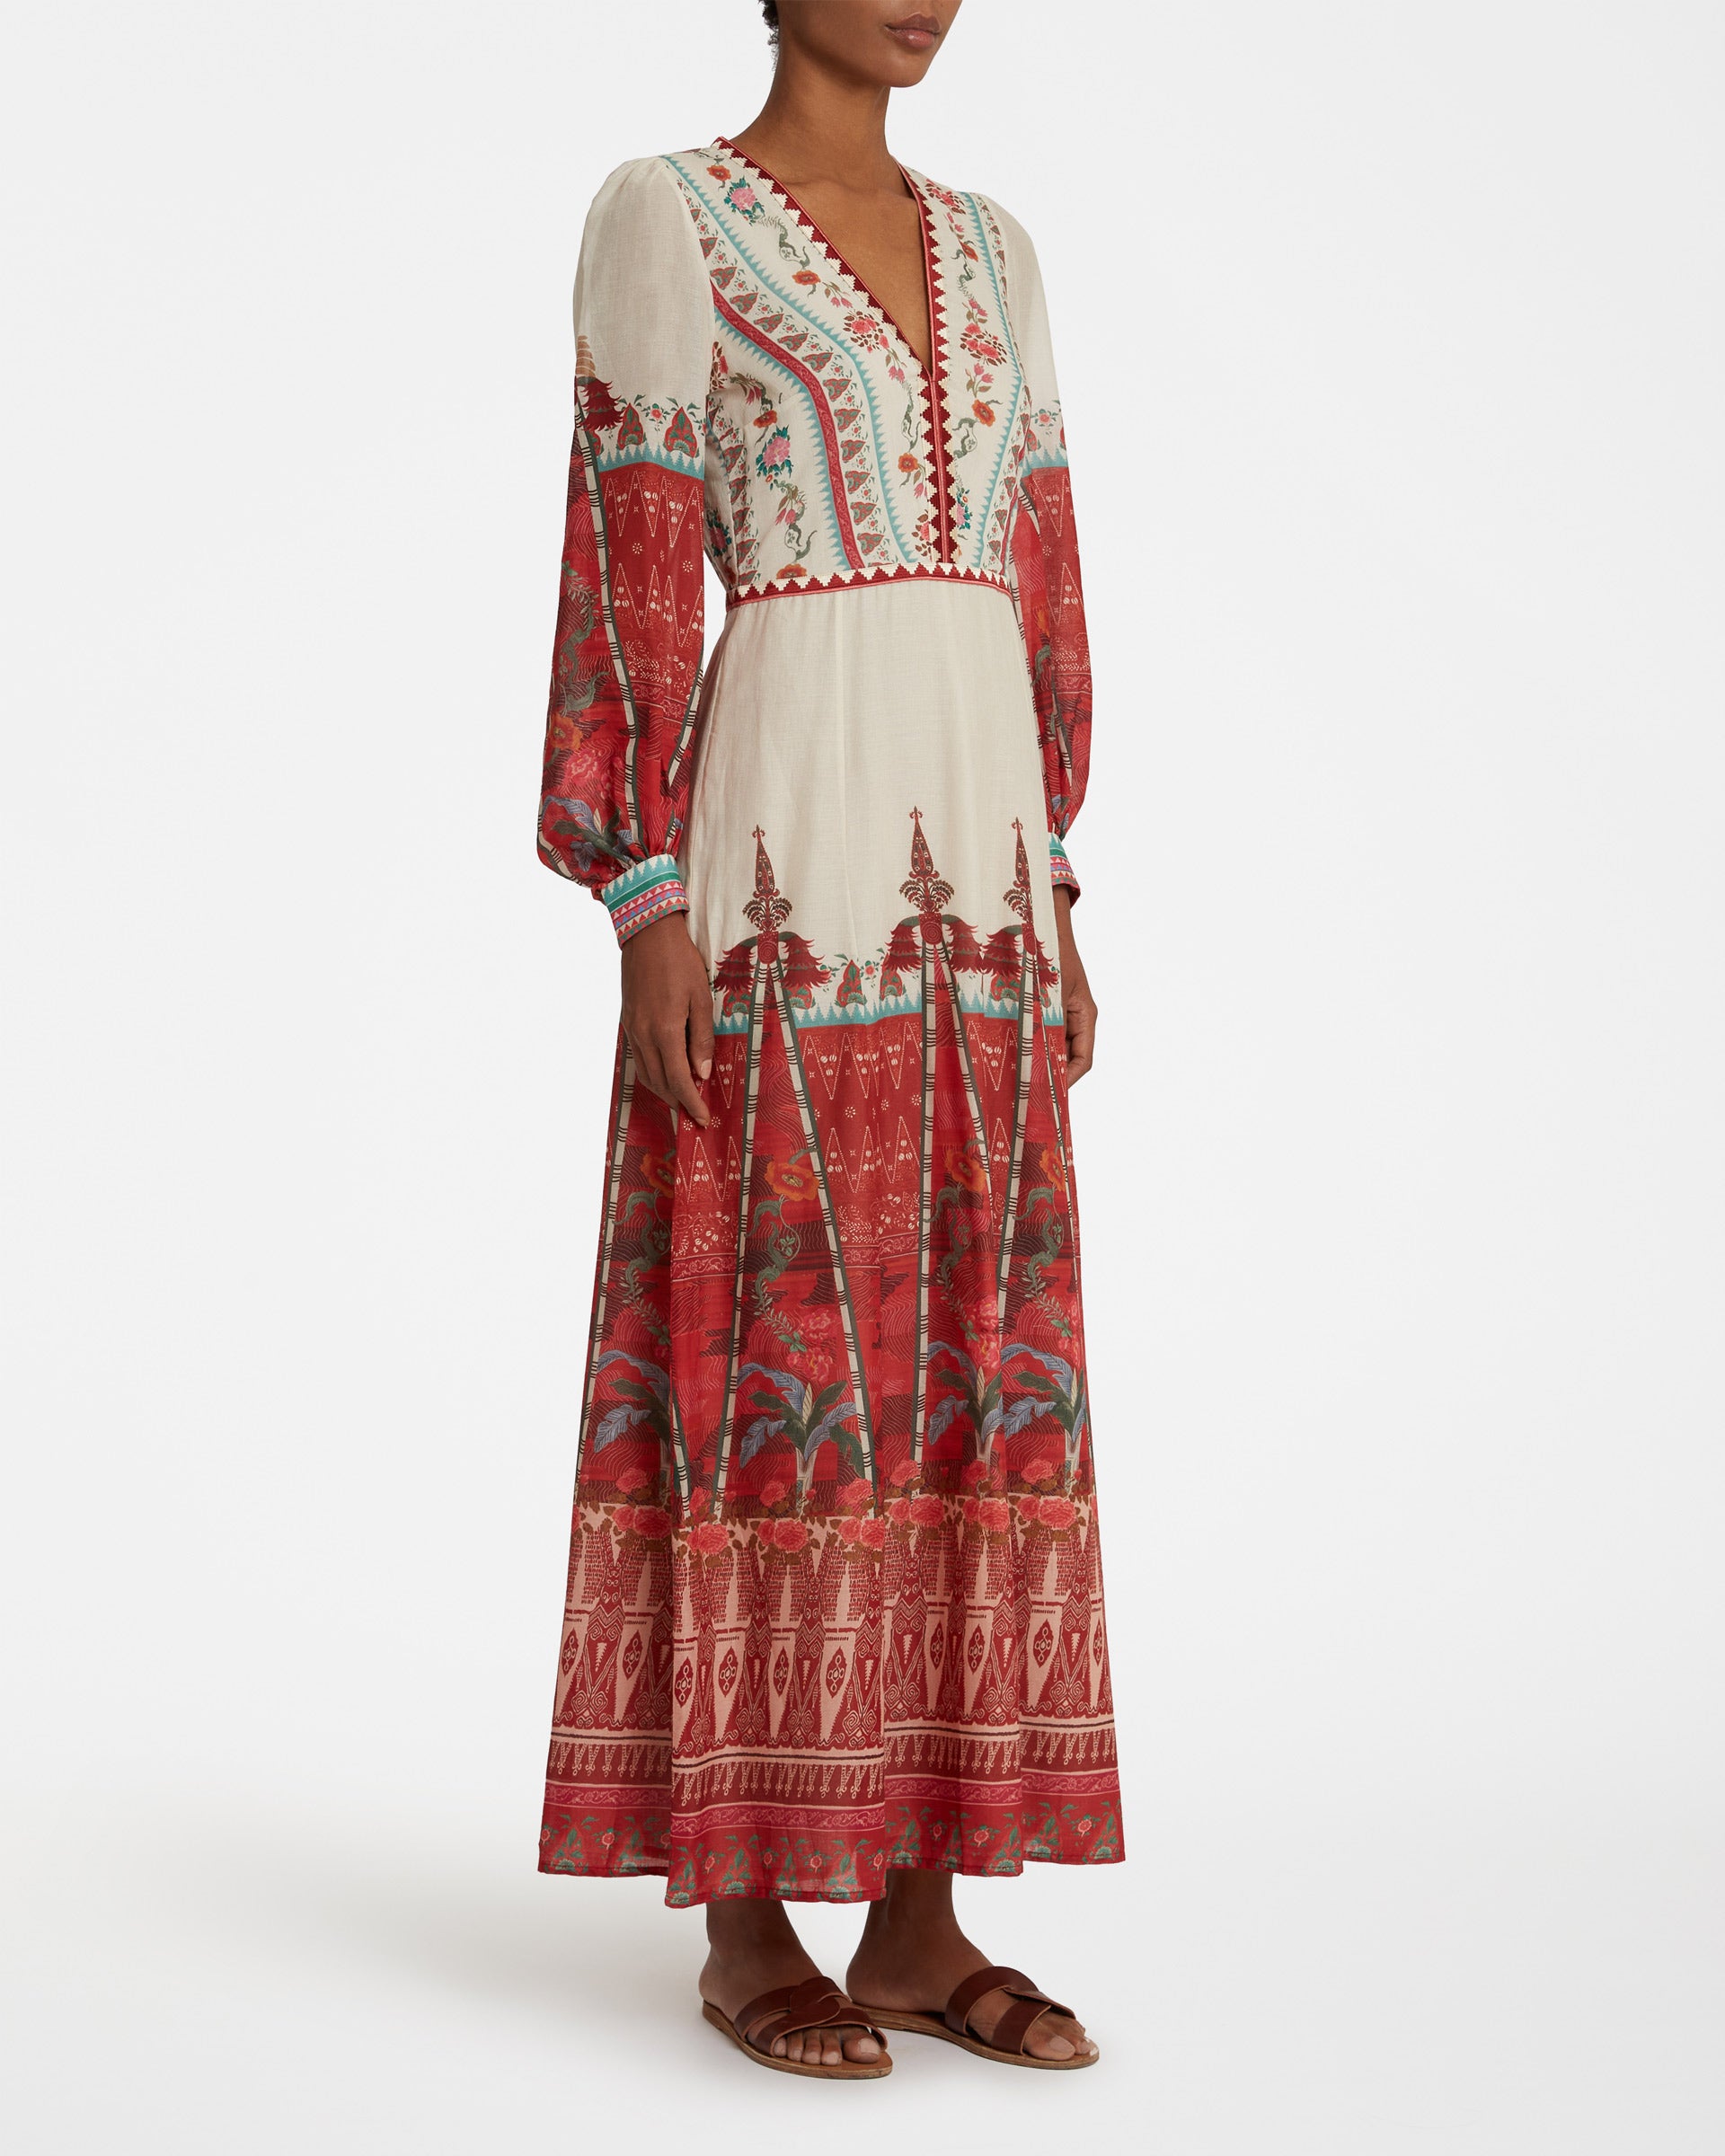 Adelaide Dress in Saladin Print